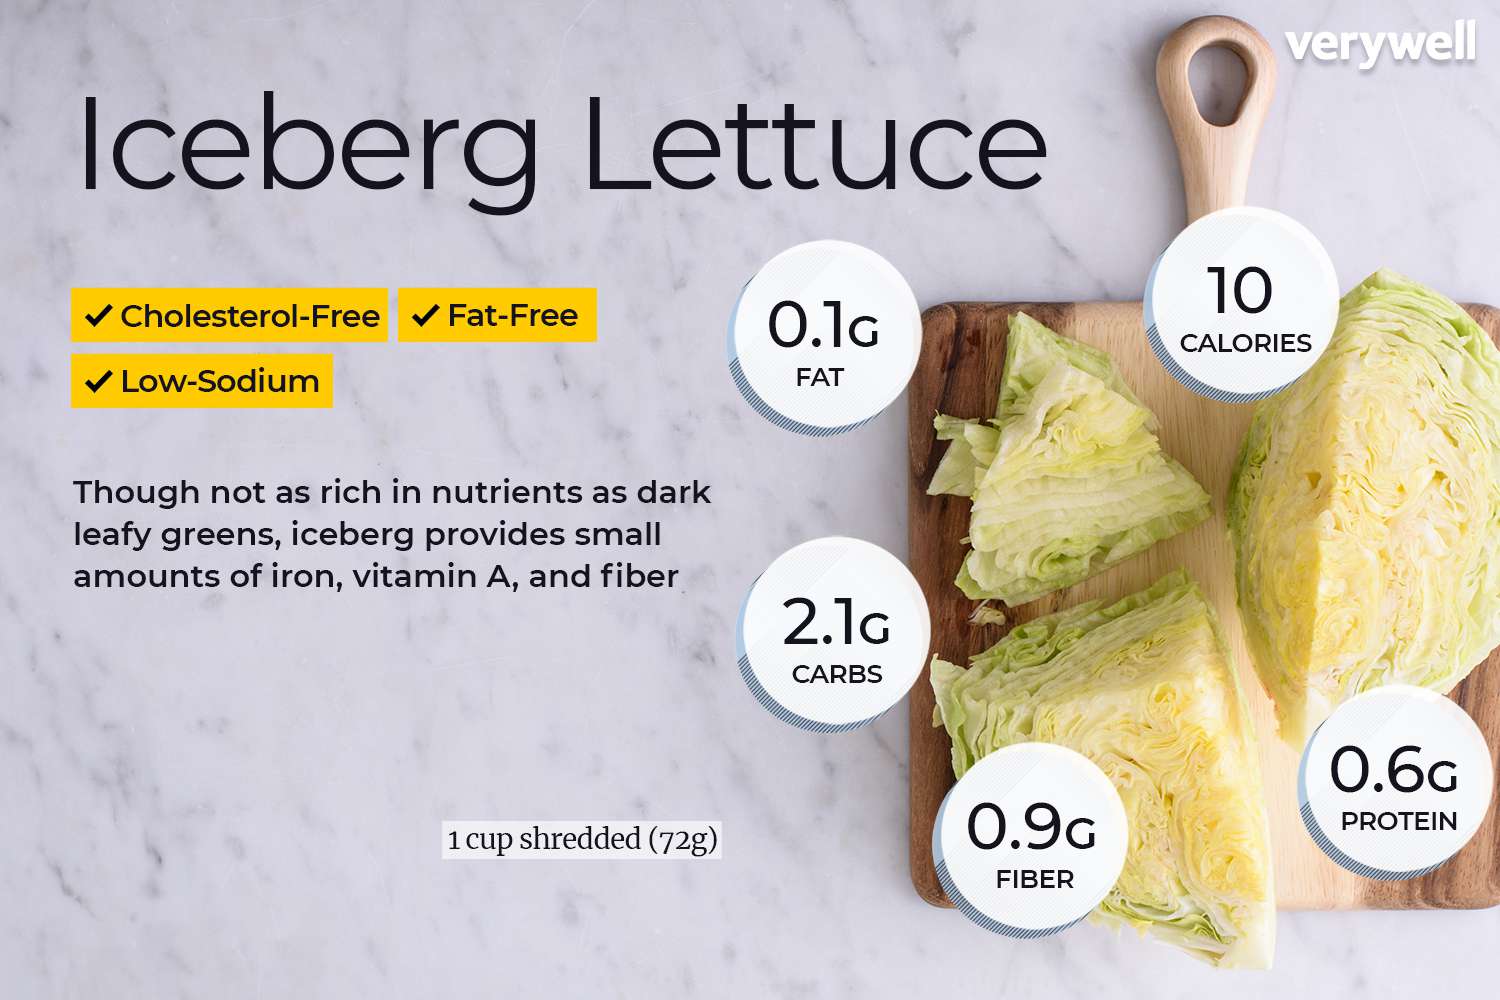 Iceberg lettuce, annotated